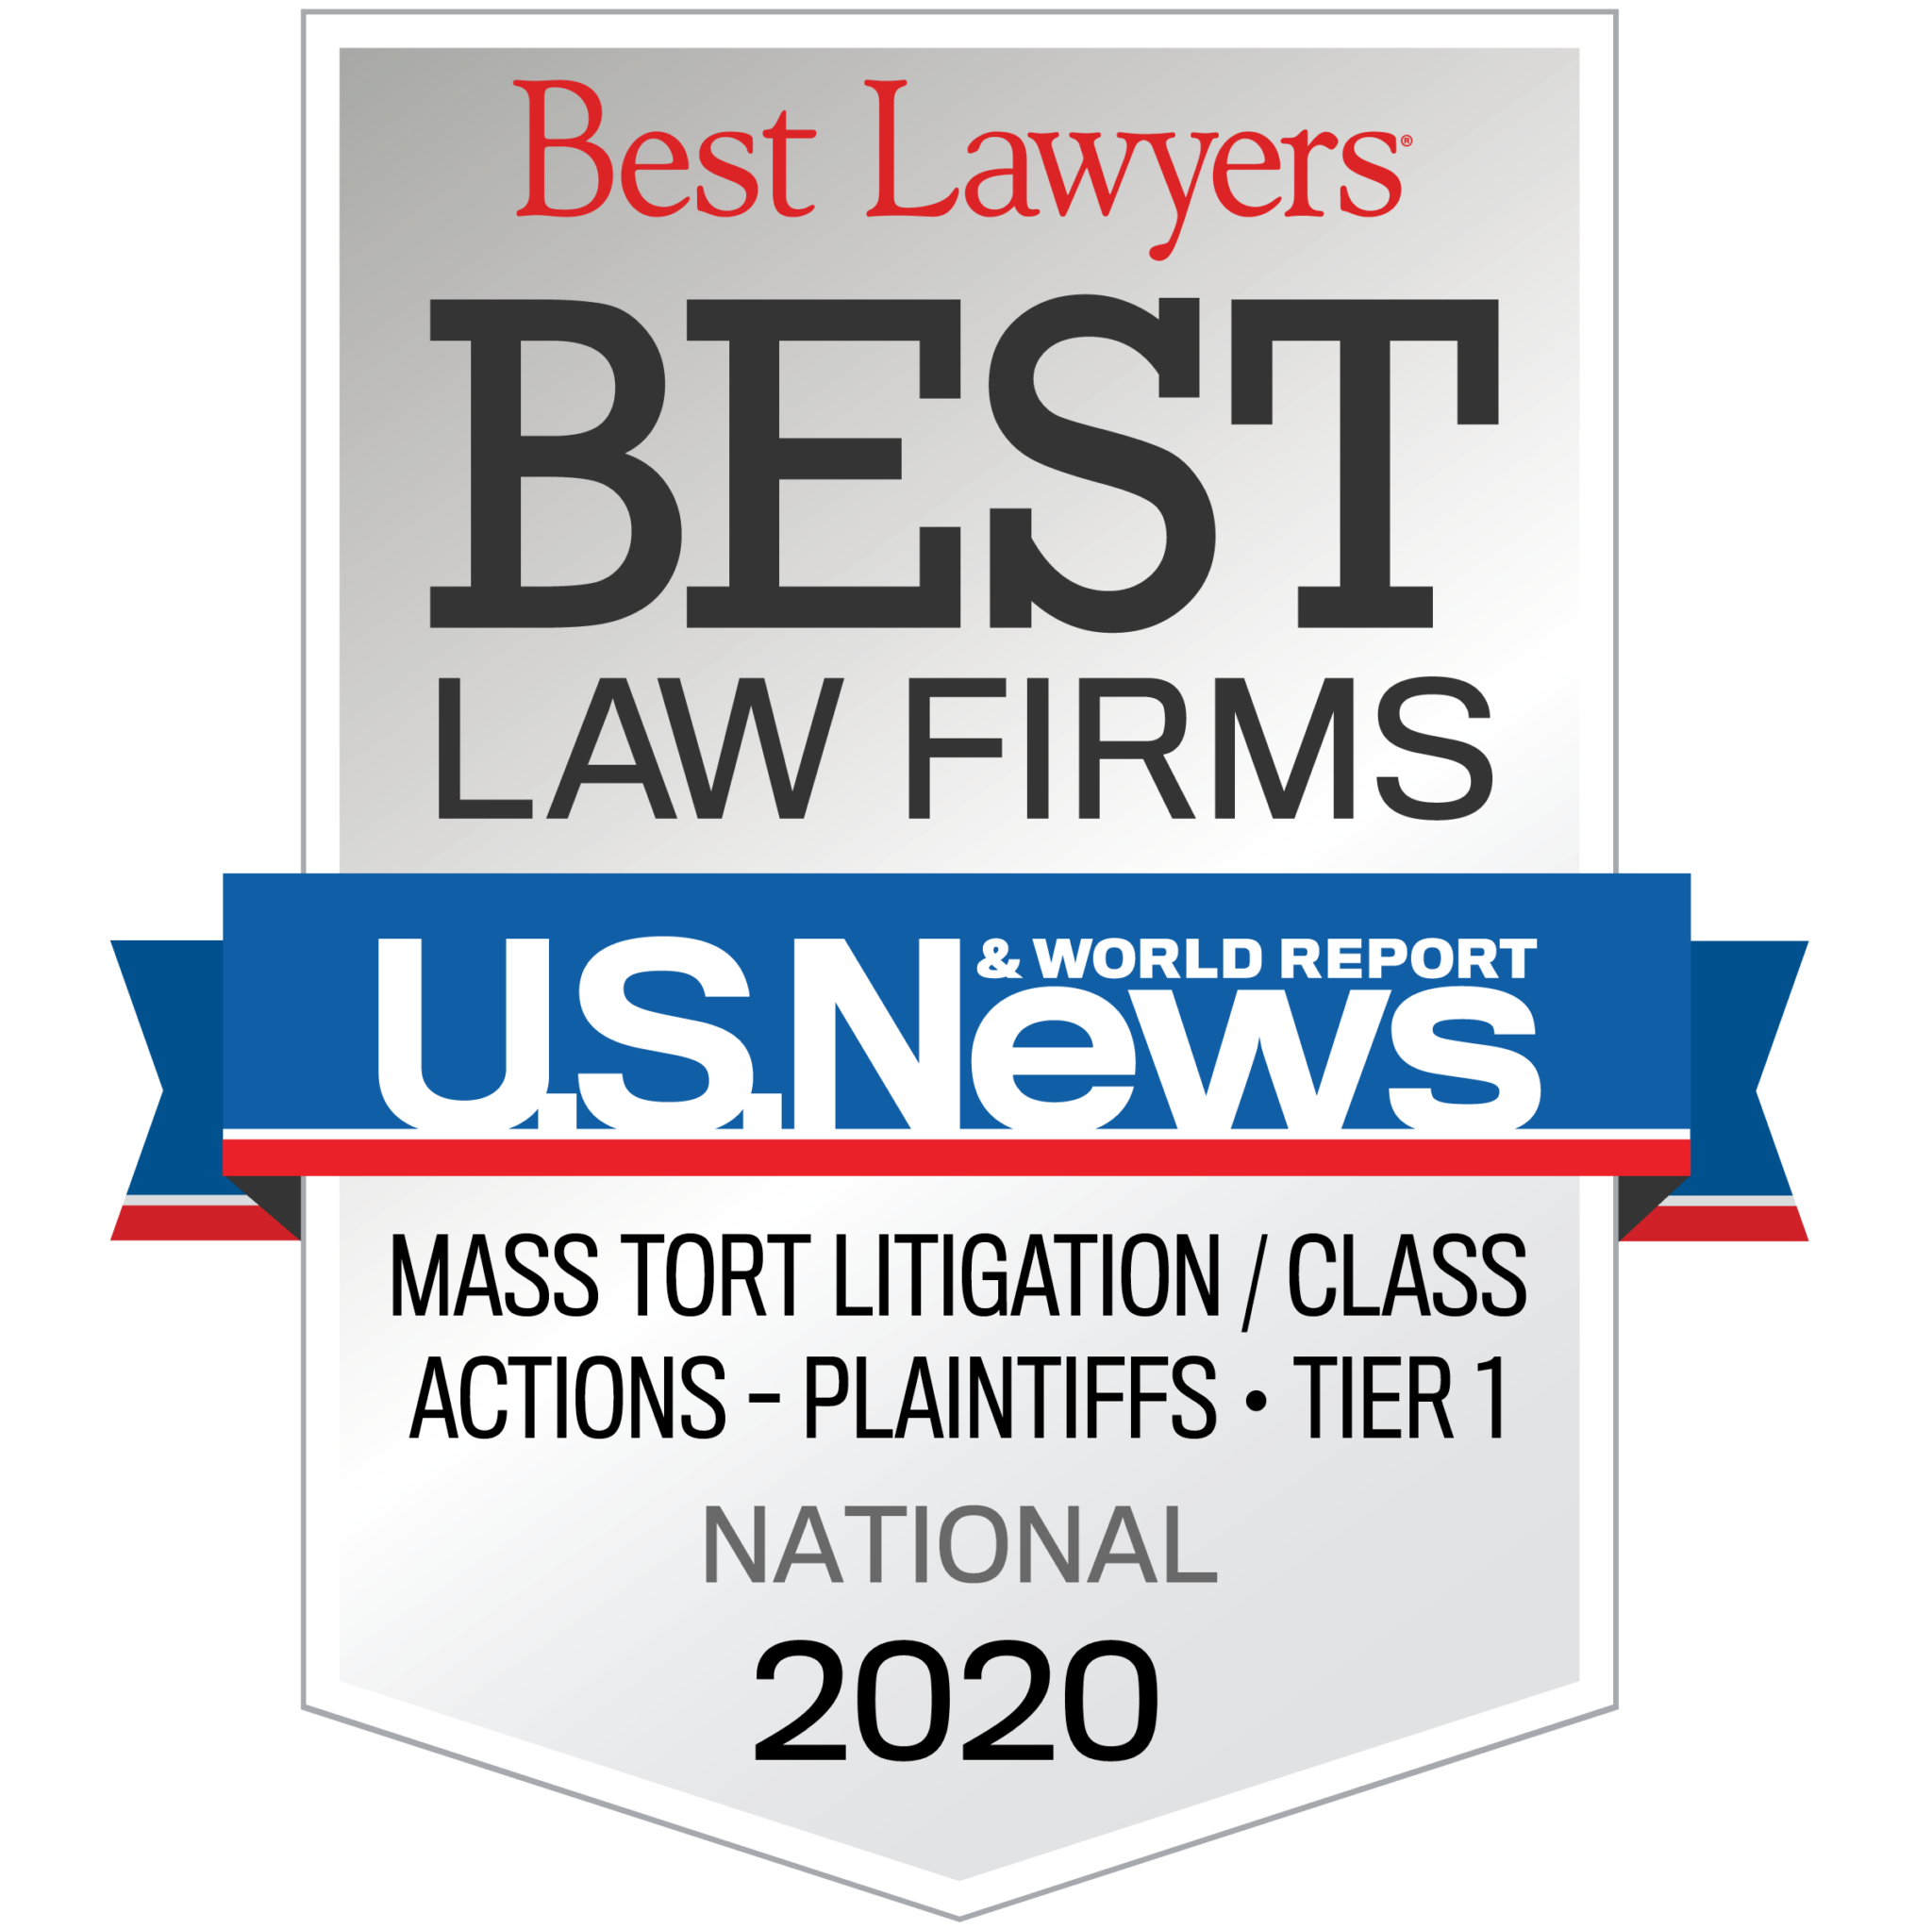 Best Lawyers - Best Law Firms - U.S. News 2018